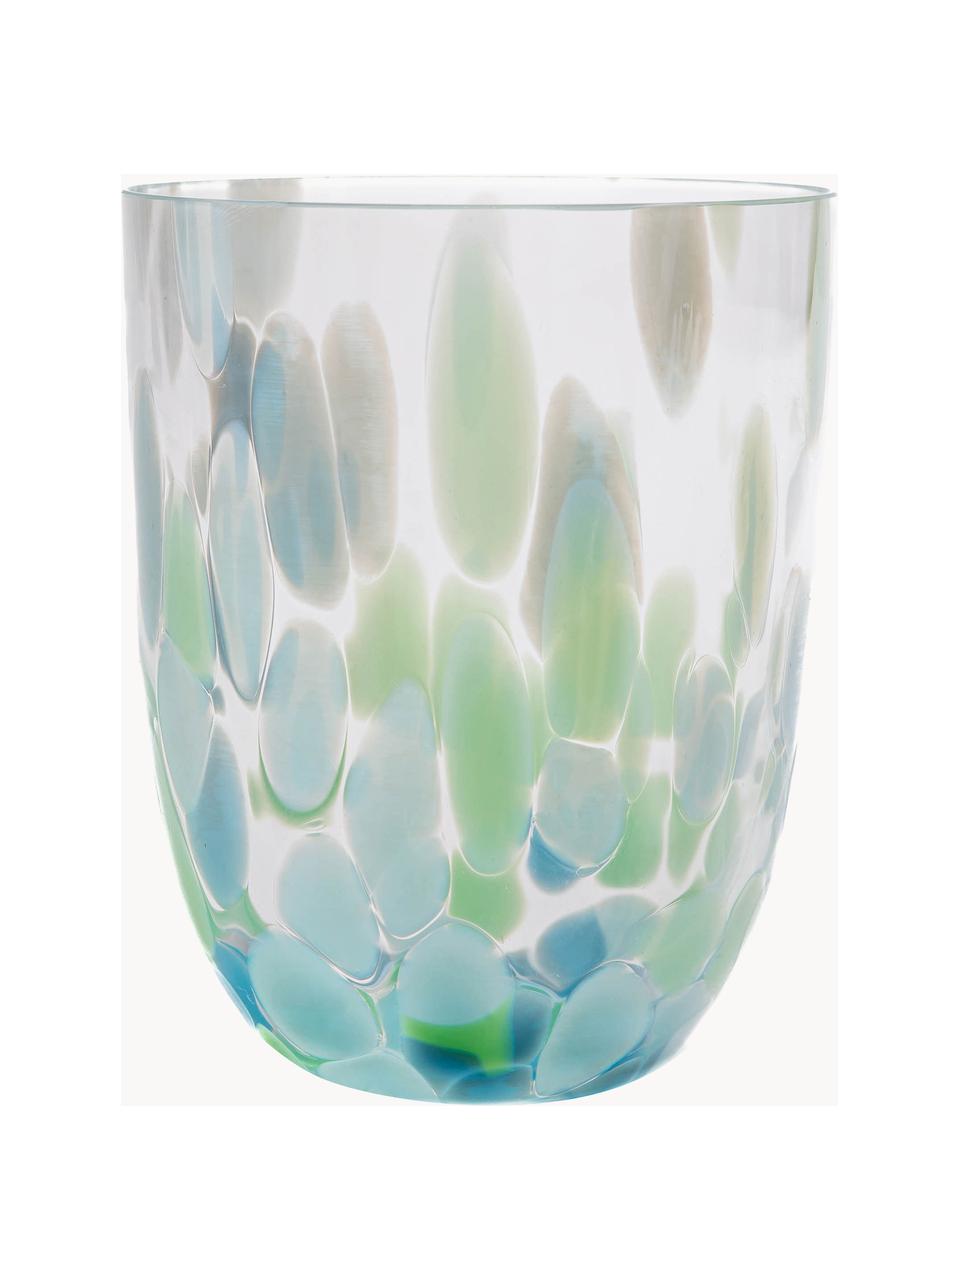 Set de vasos artesanales Big Confetti, 6 uds., Vidrio, Tonos azules, verde menta, transparente, Ø 7 x Al 10 cm, 250 ml